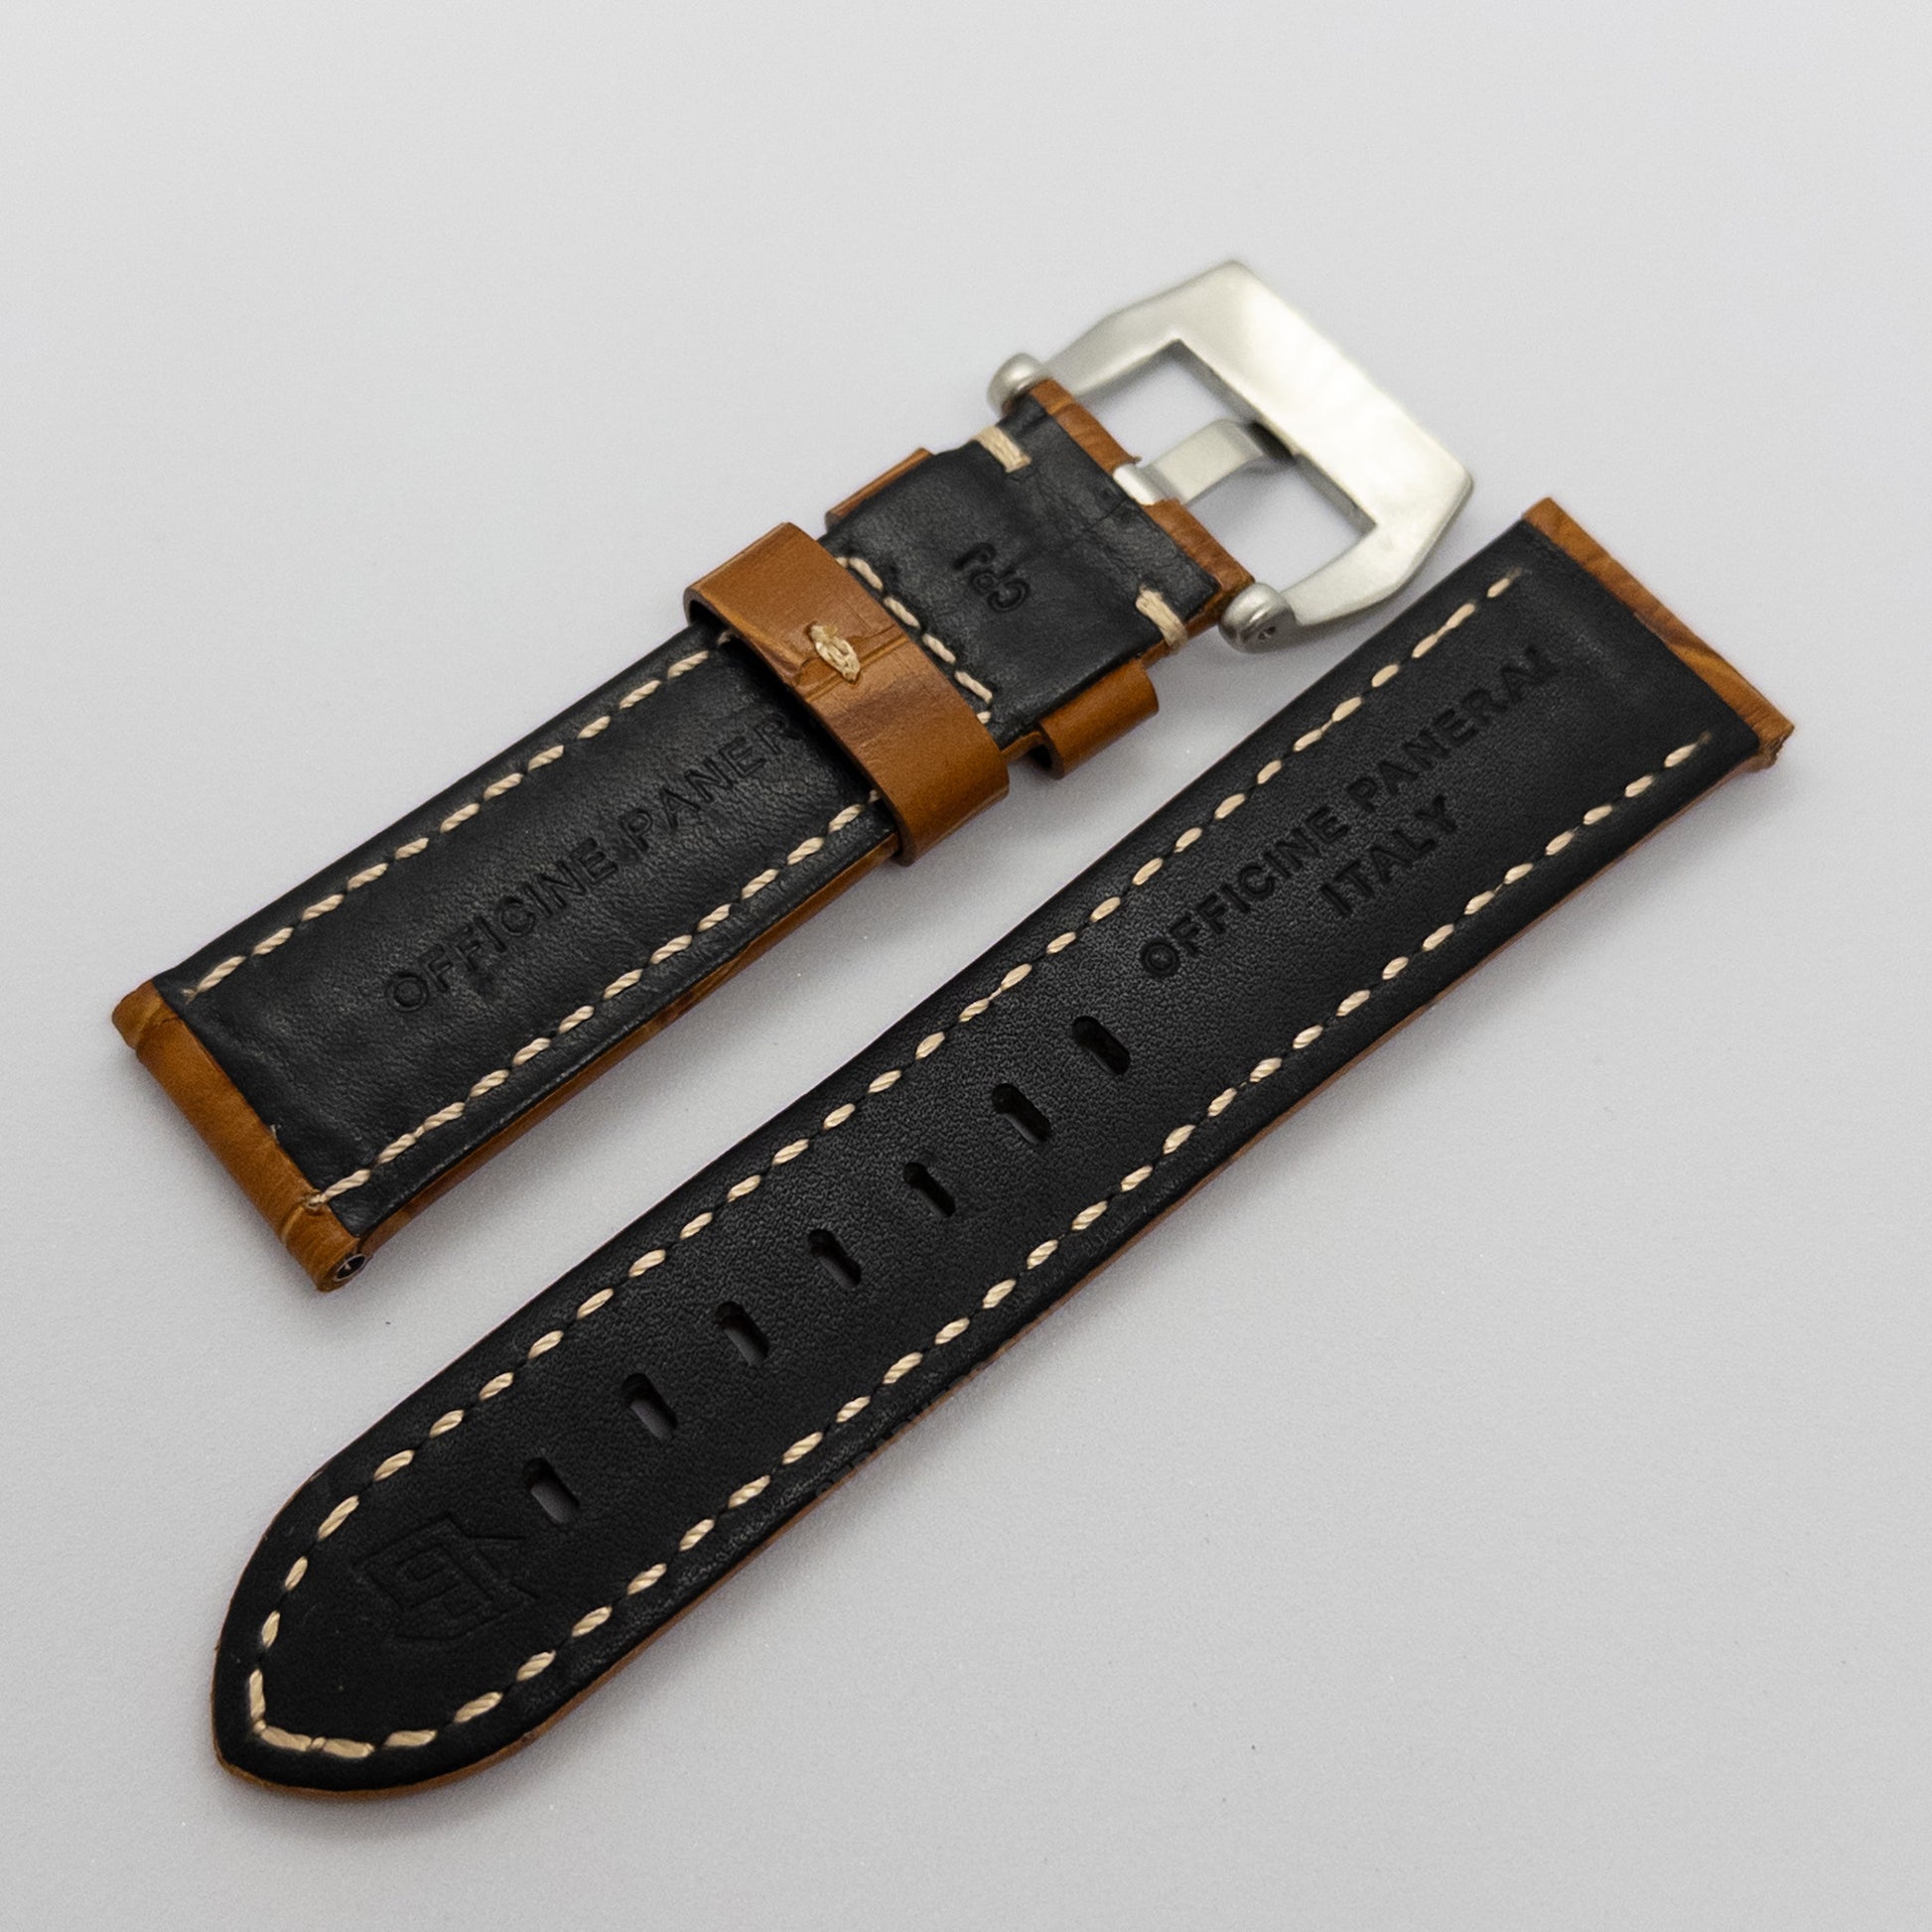 22mm panerai officine leather watchband brown